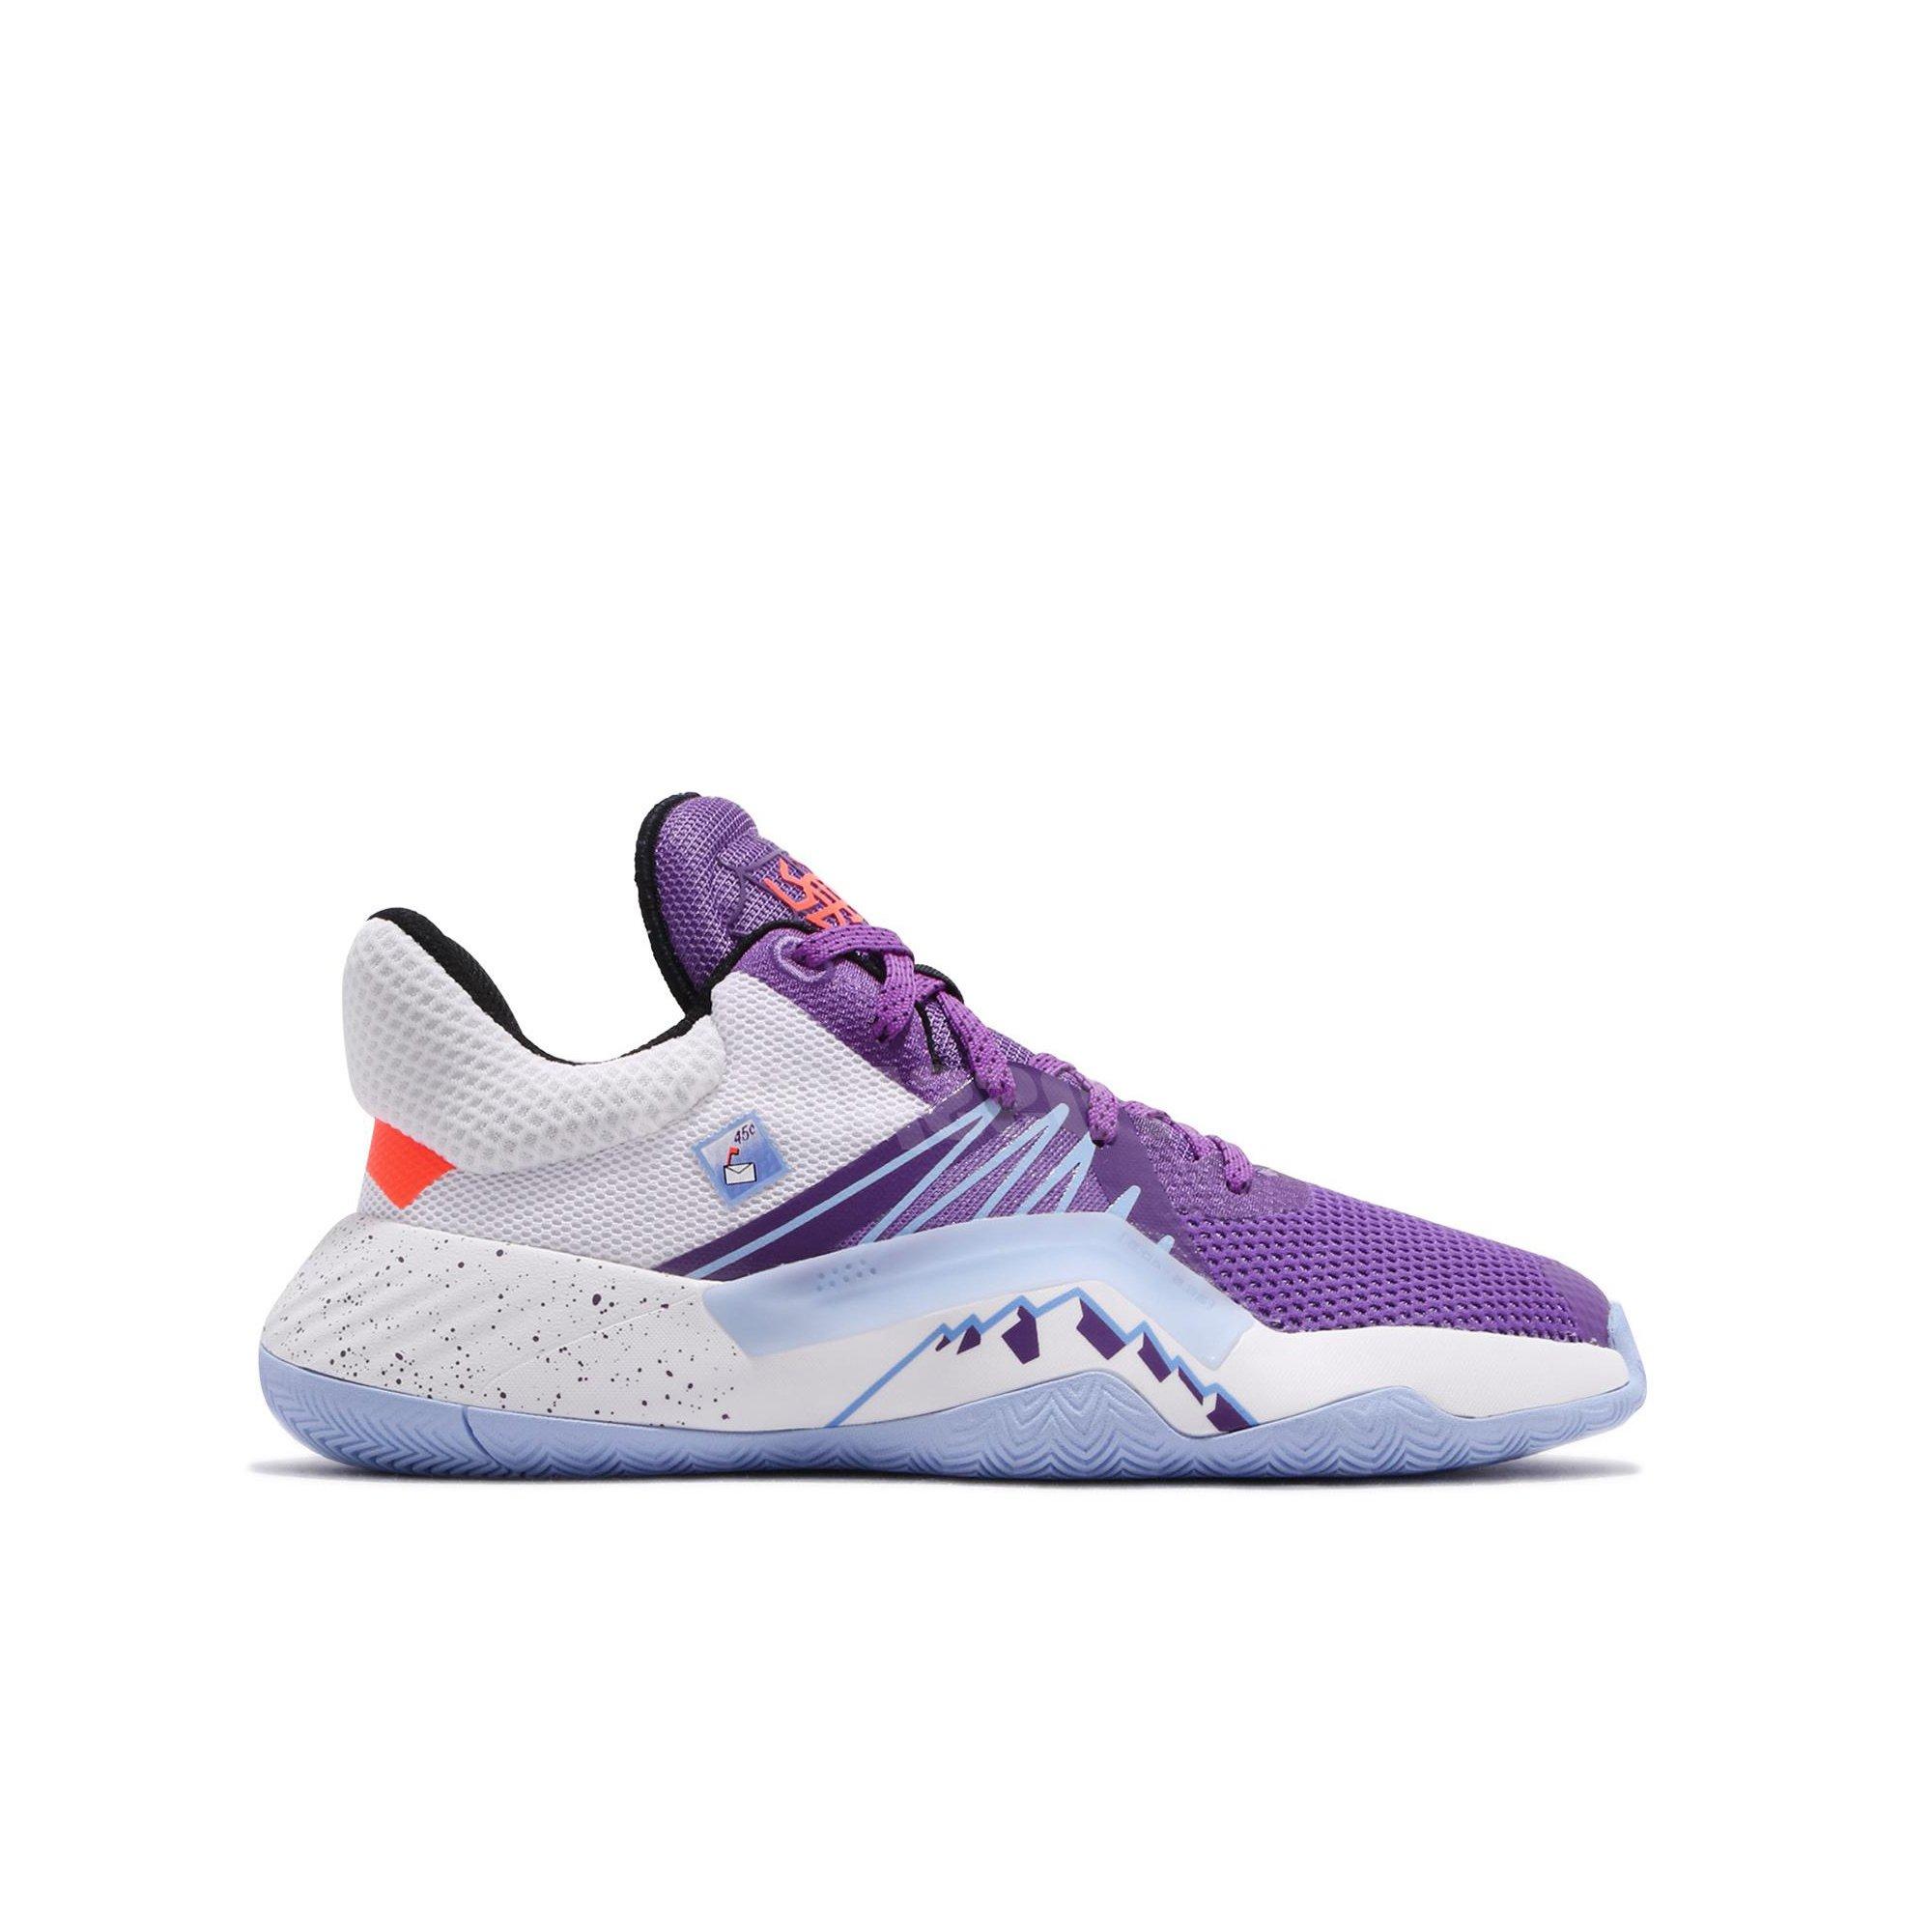 adidas don issue 1 purple